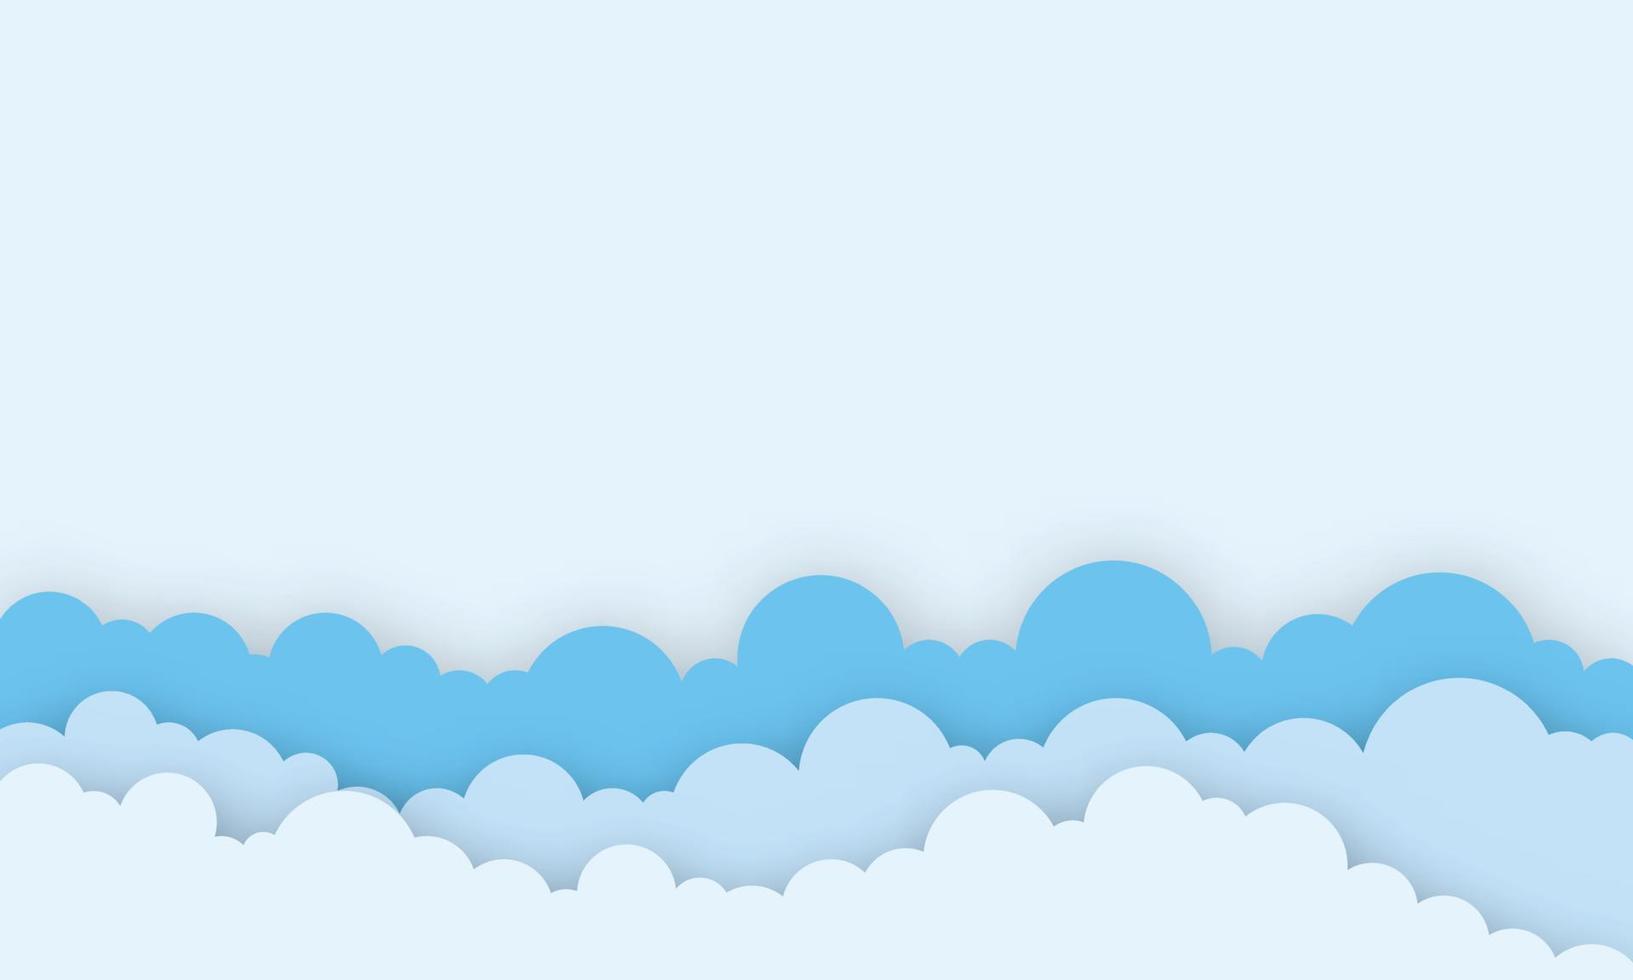 papperskonst av klart moln med leksaksdusch på blå himmel papperssnitt stil, baby boy kort illustration vektor